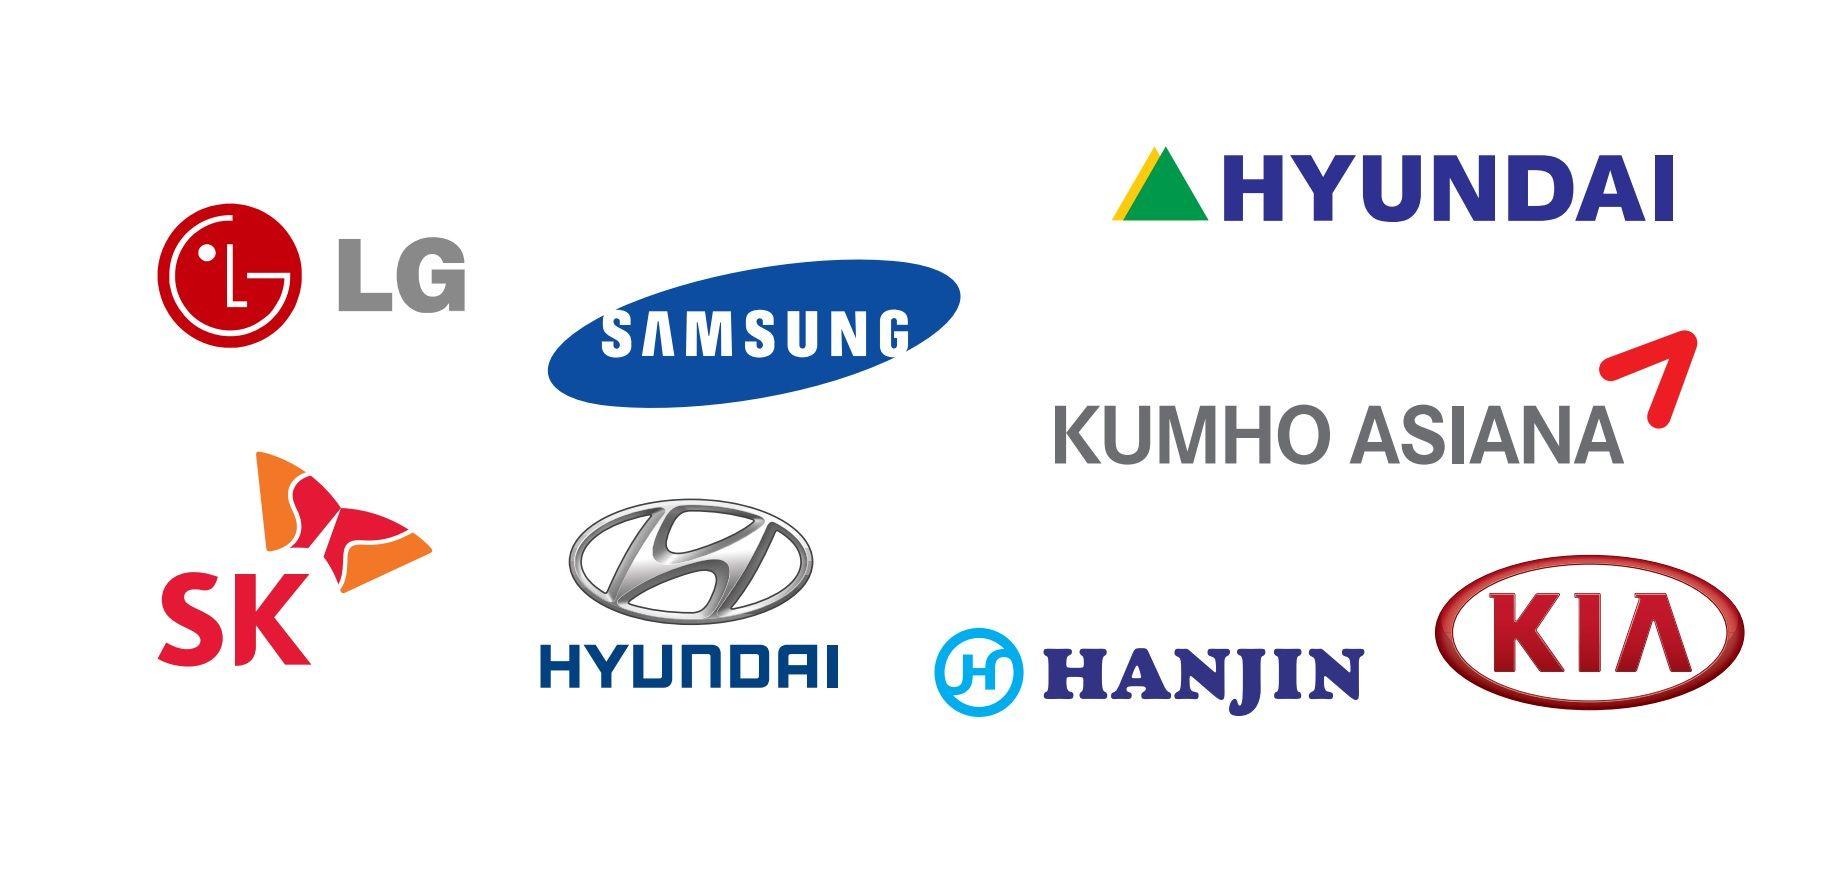 South Korea Company Logo - Profitability of Korea's Business Groups Tumbled in 2014